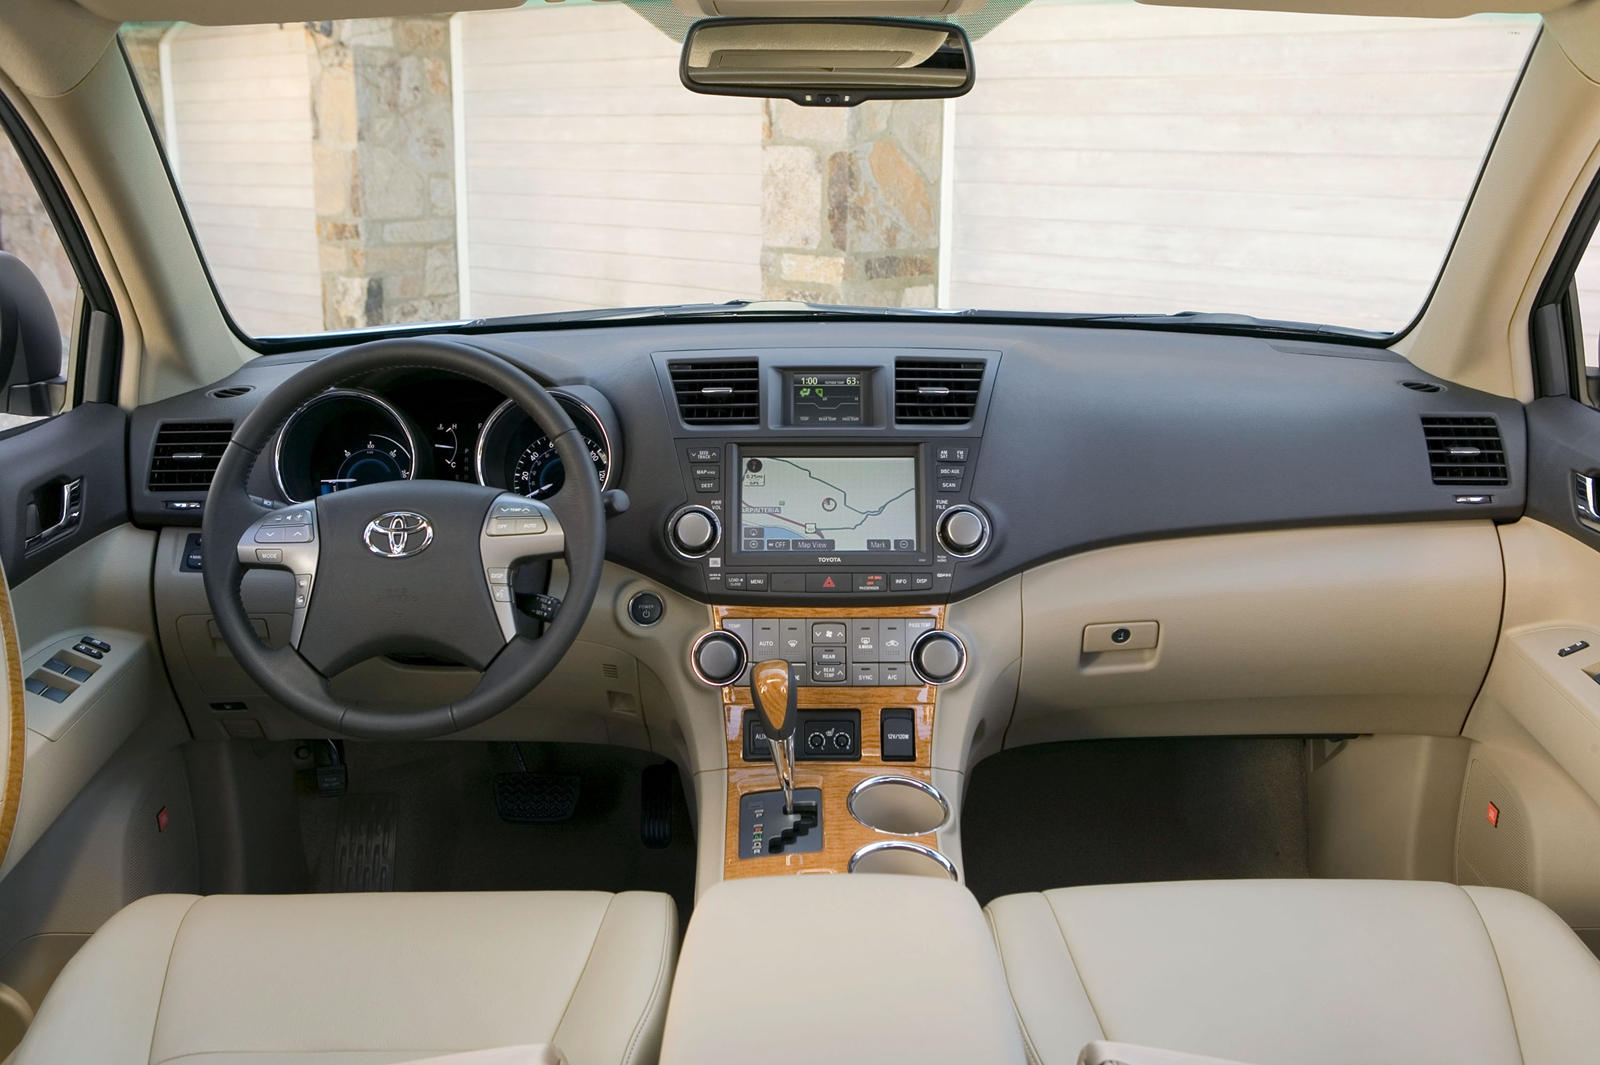 Toyota highlander 2008 interior